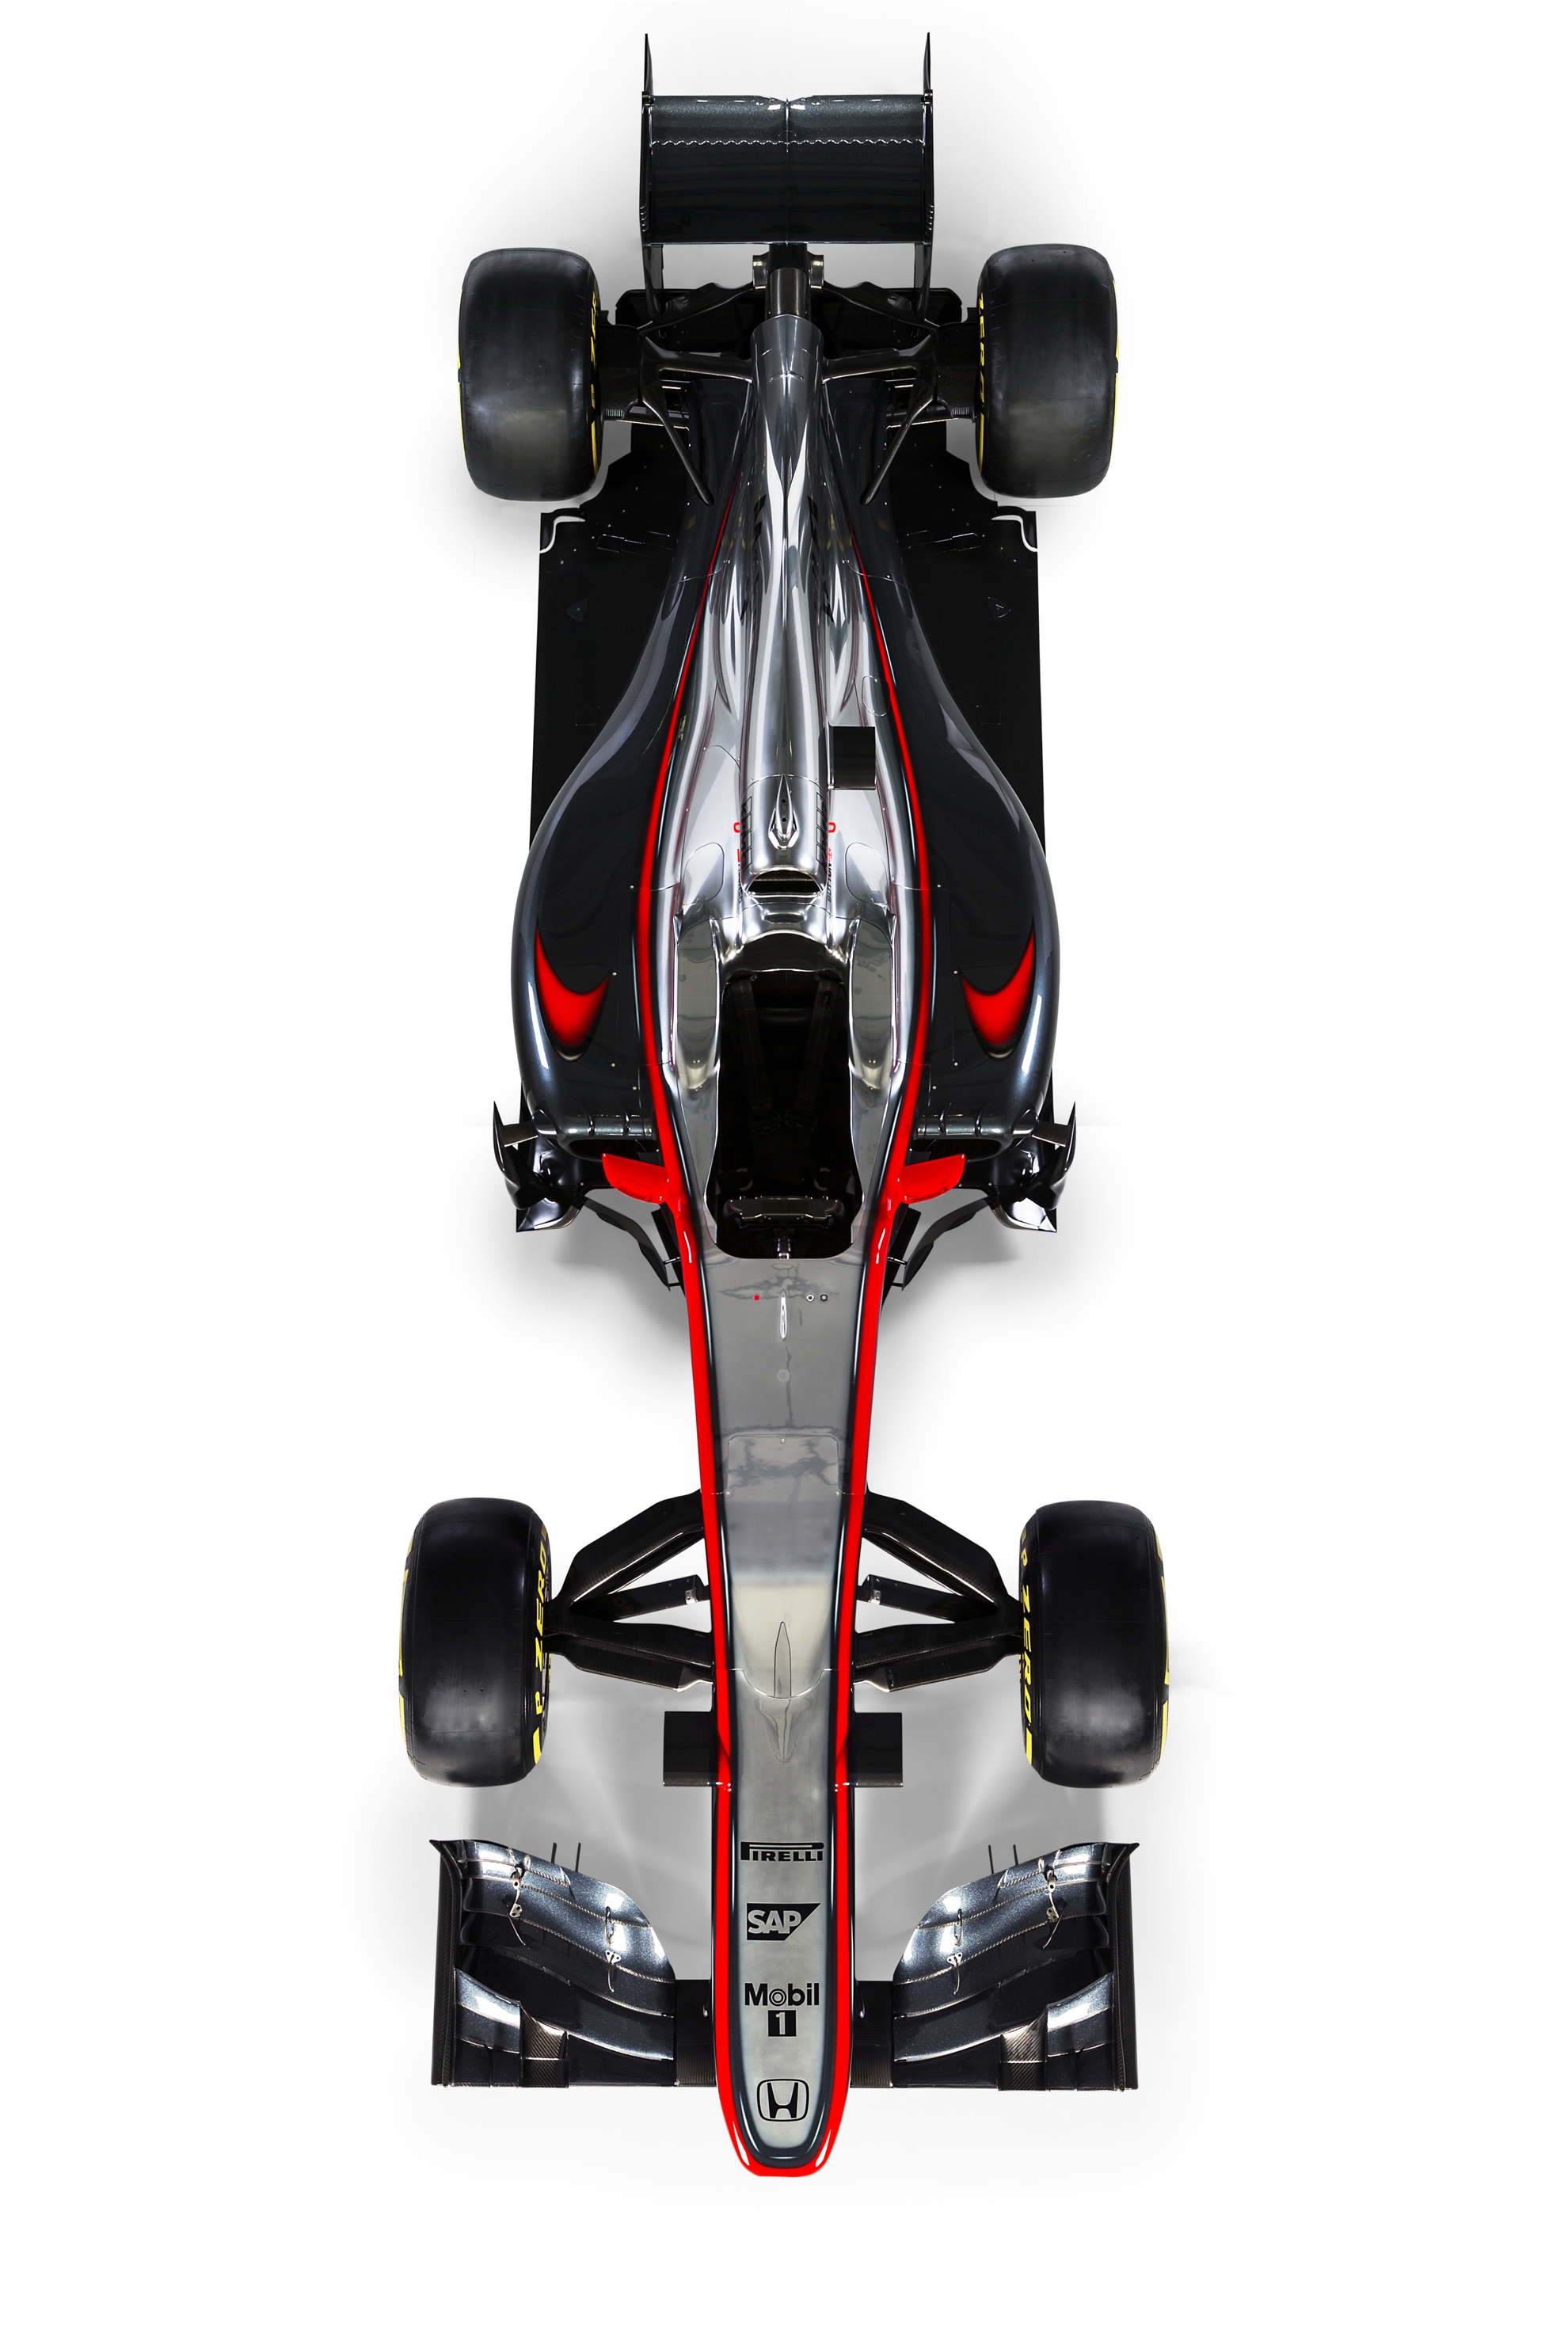 McLaren-Honda Reveals the New MP4-30